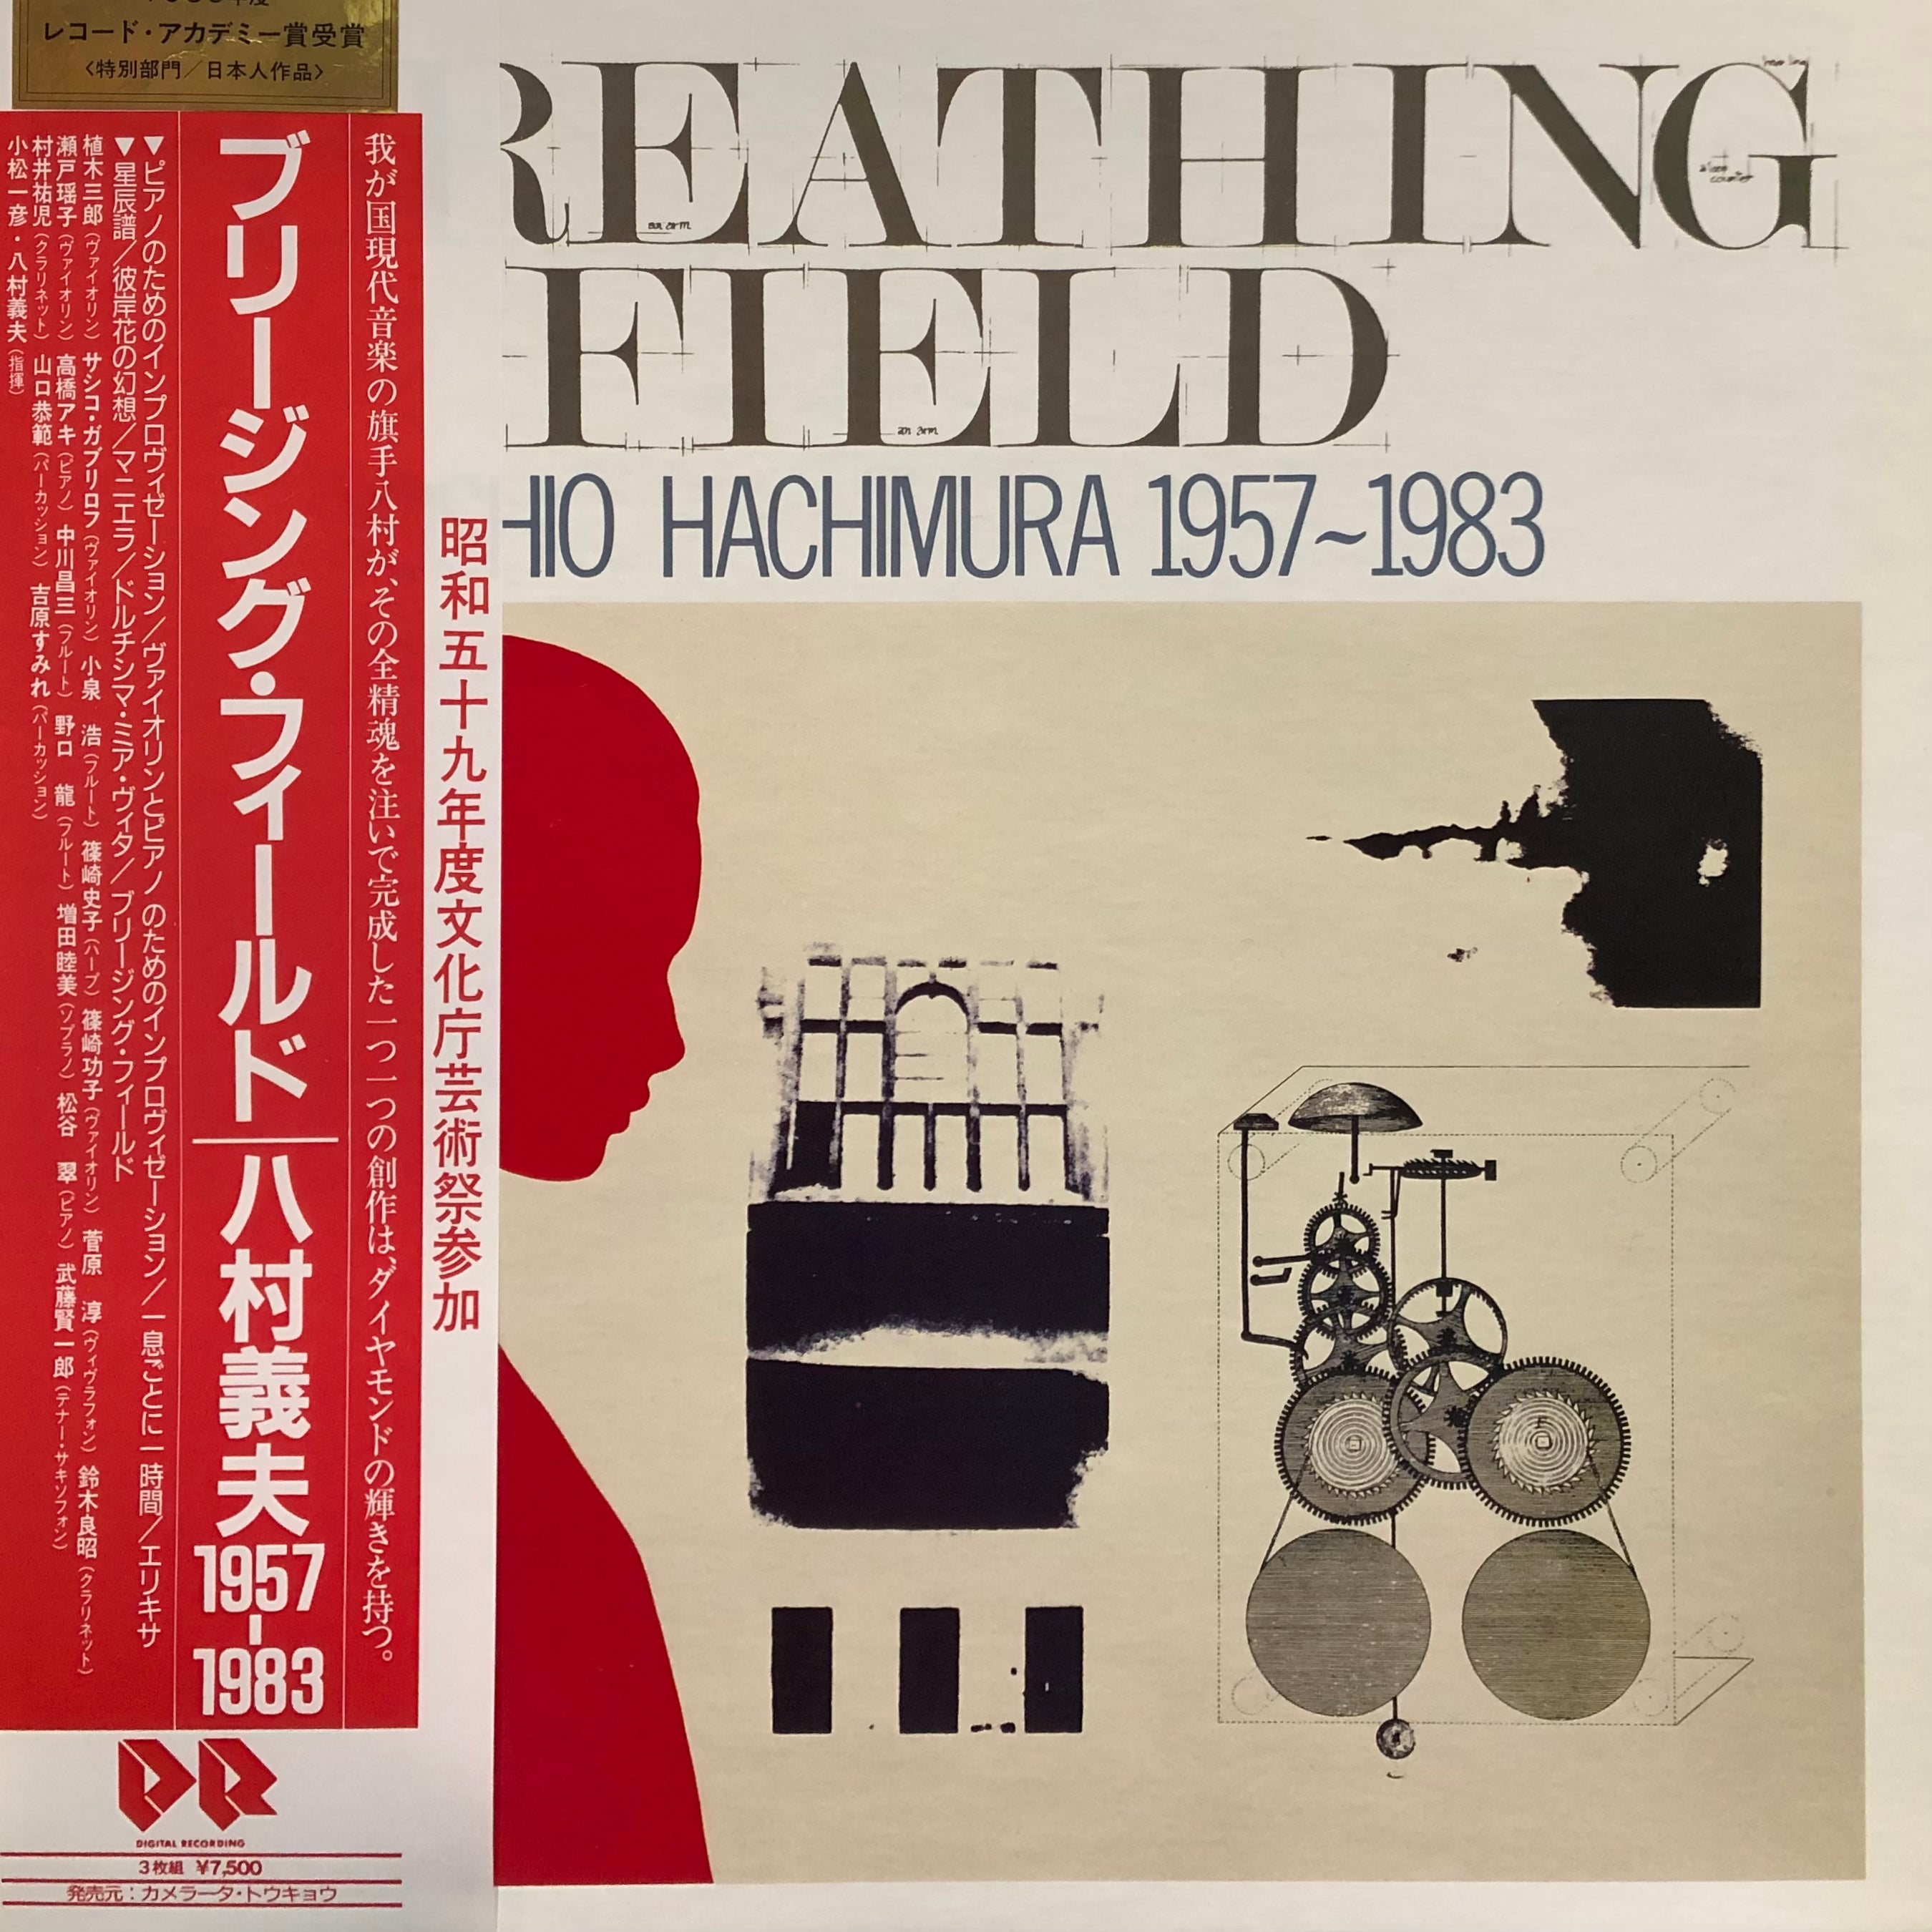 Yoshio Hachimura “Breathing Field” – PHYSICAL STORE